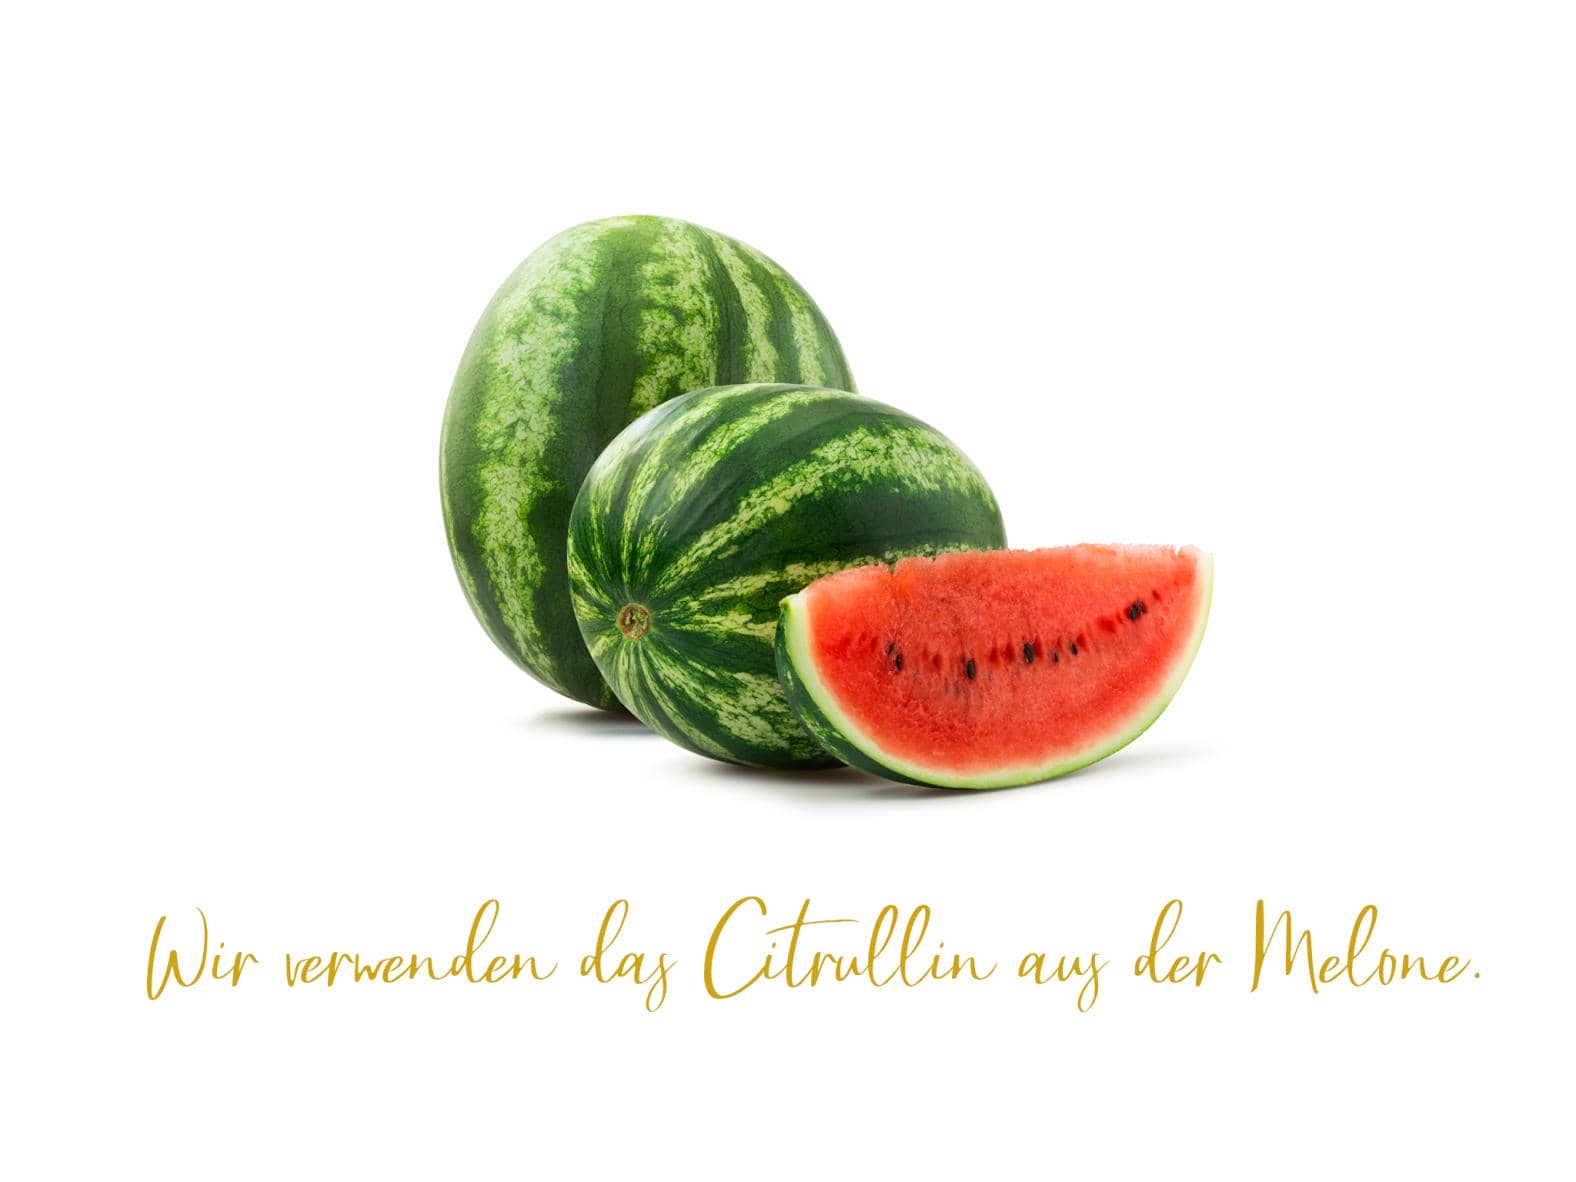 L-Citrullin aus der Melone